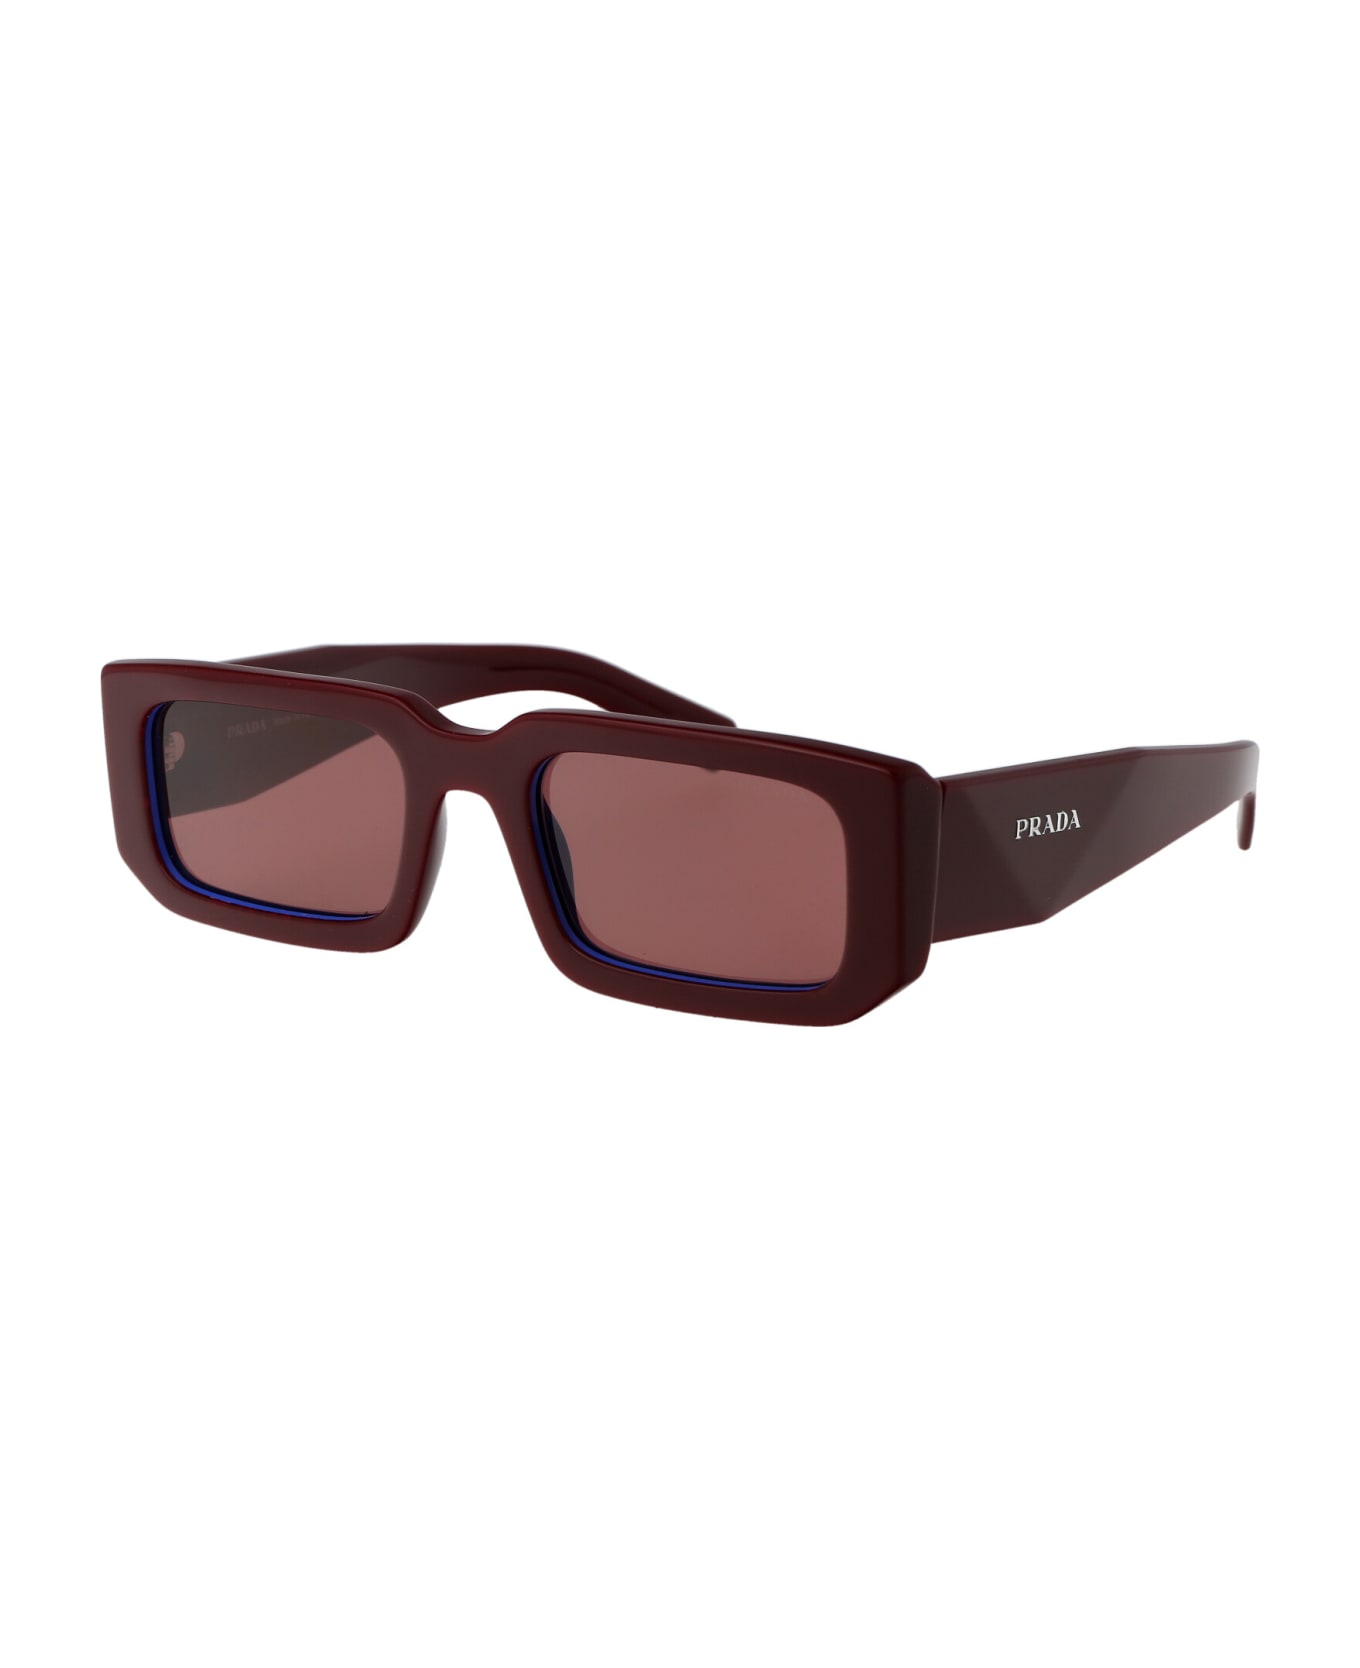 Prada Eyewear 0pr 06ys Sunglasses - 16M08S Etruscan/Blue